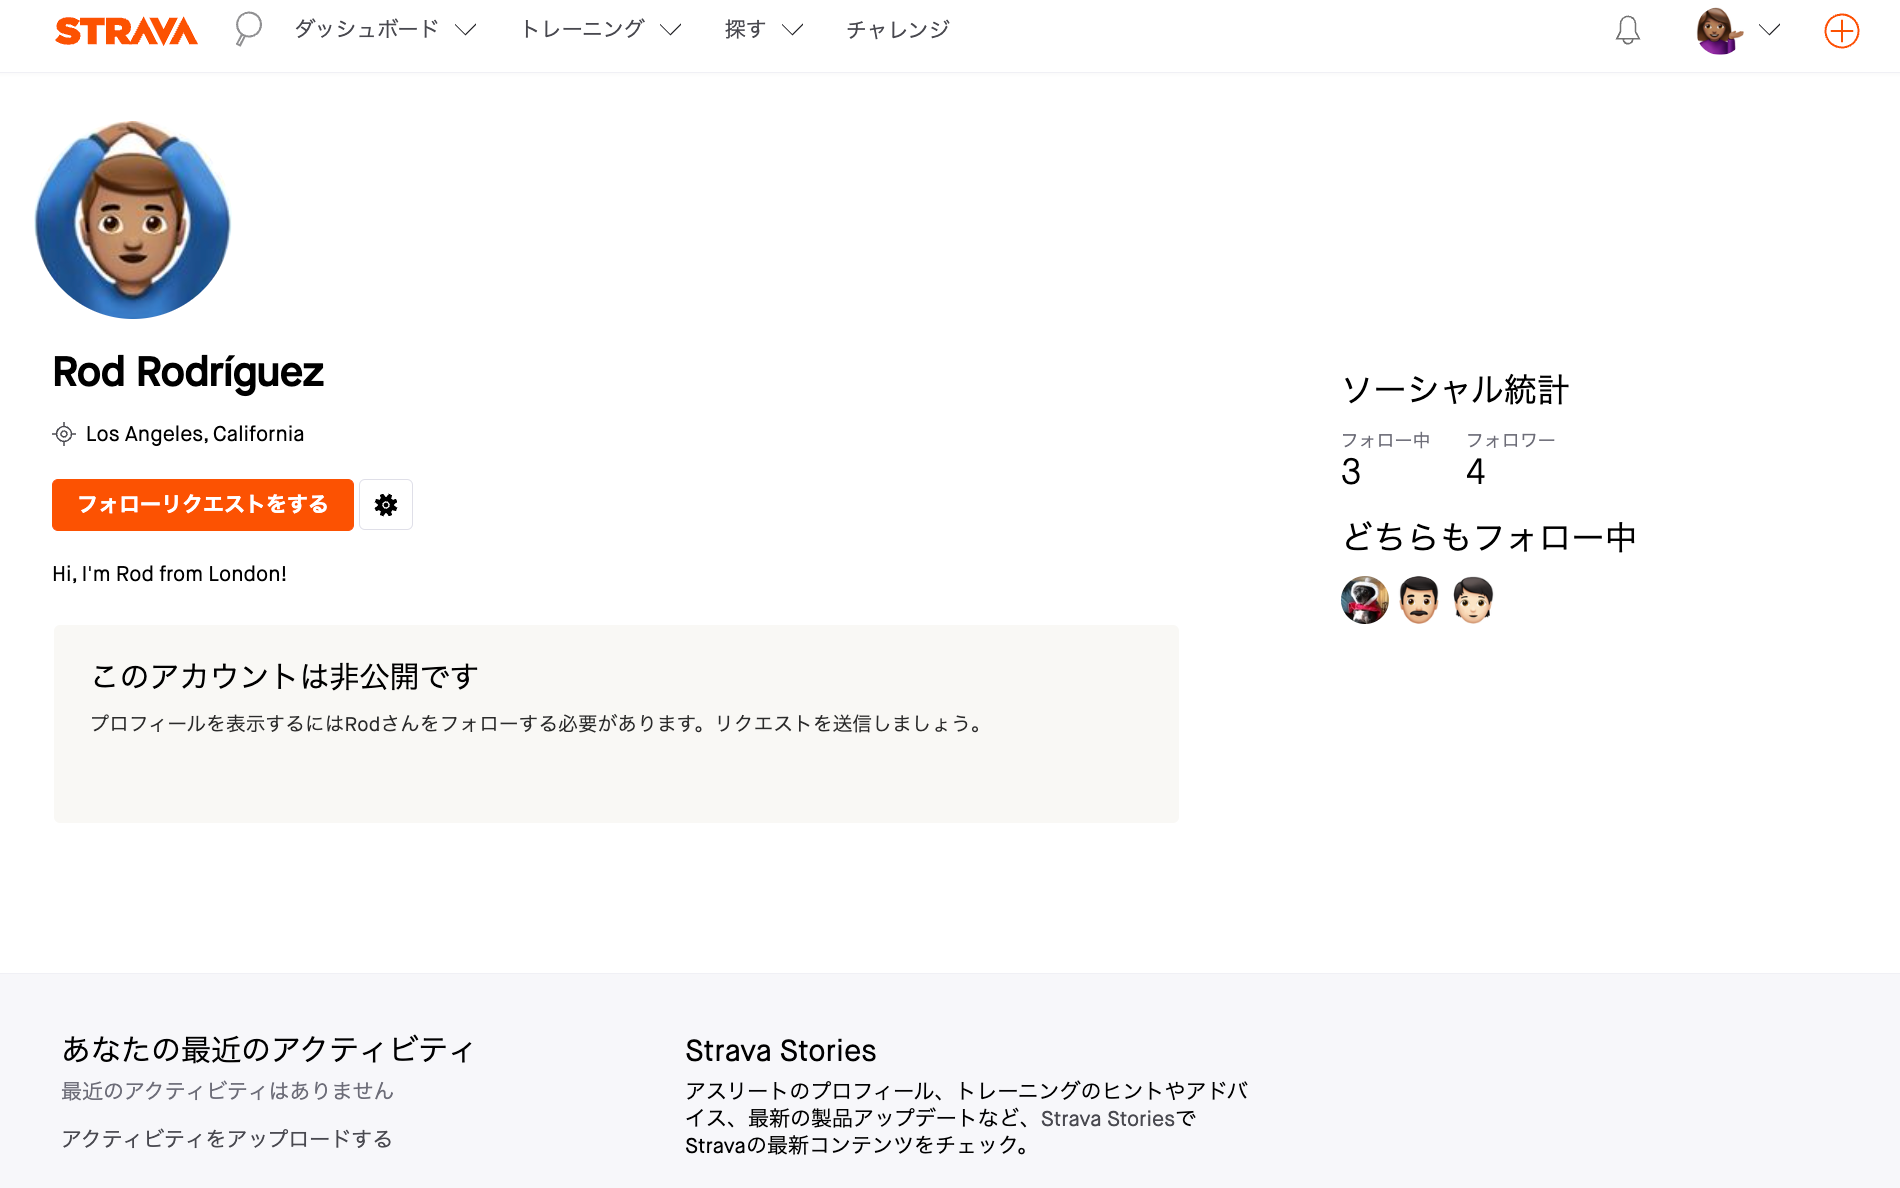 ProfilePage_Japanese2.png